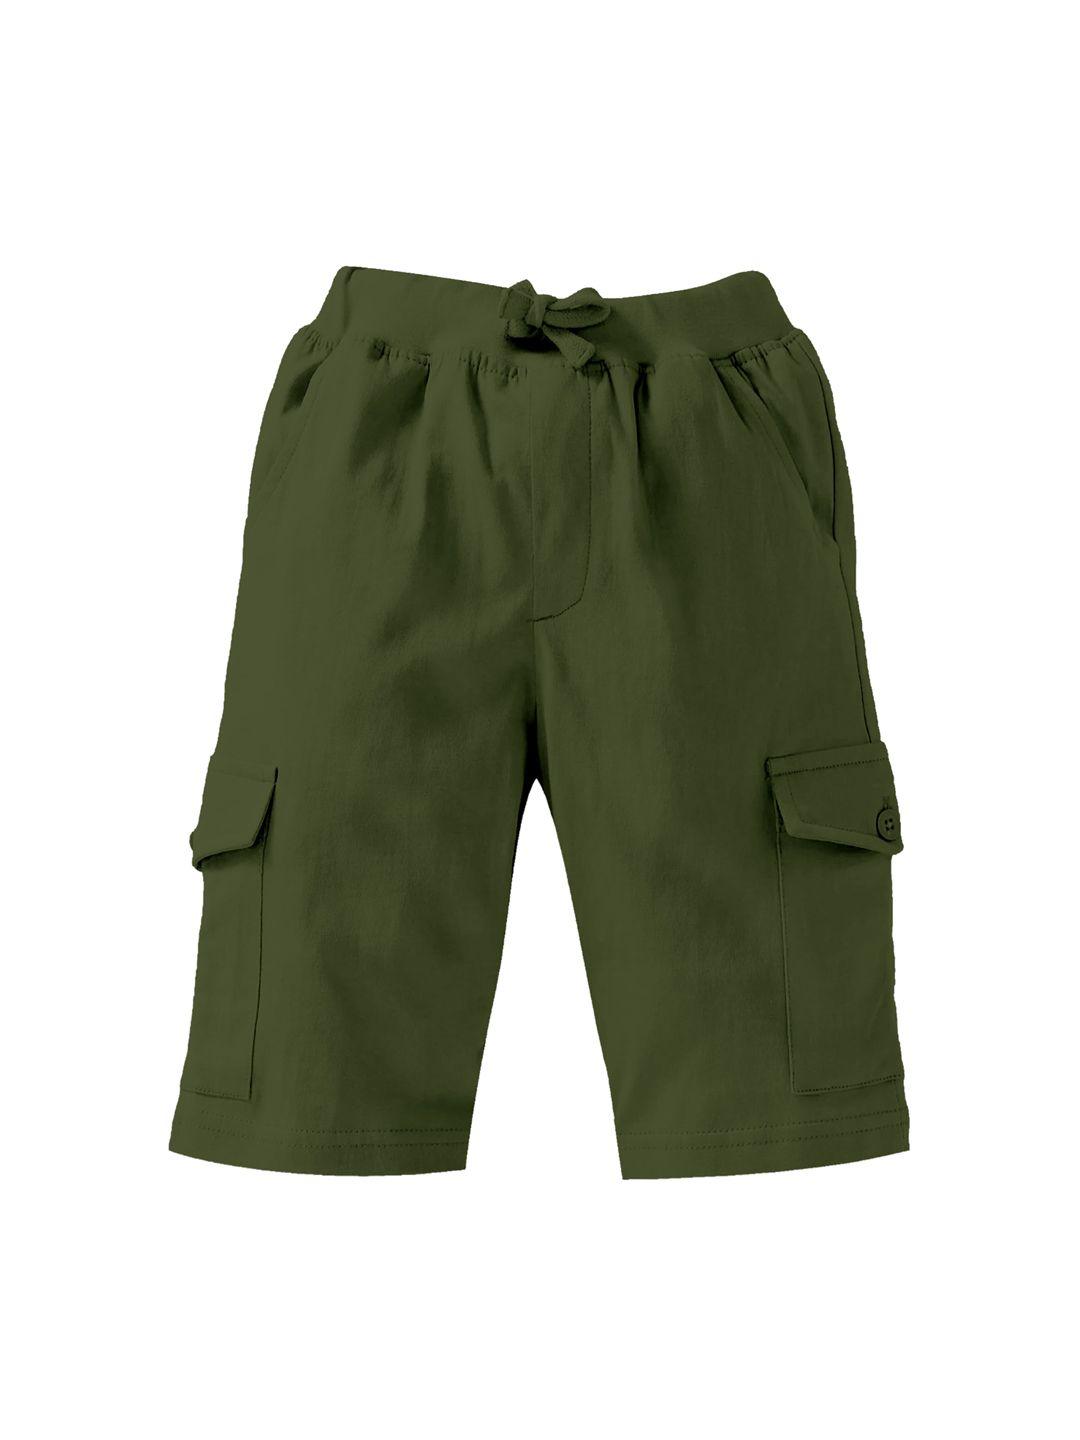 KiddoPanti Boys Olive Green High-Rise Cotton Shorts